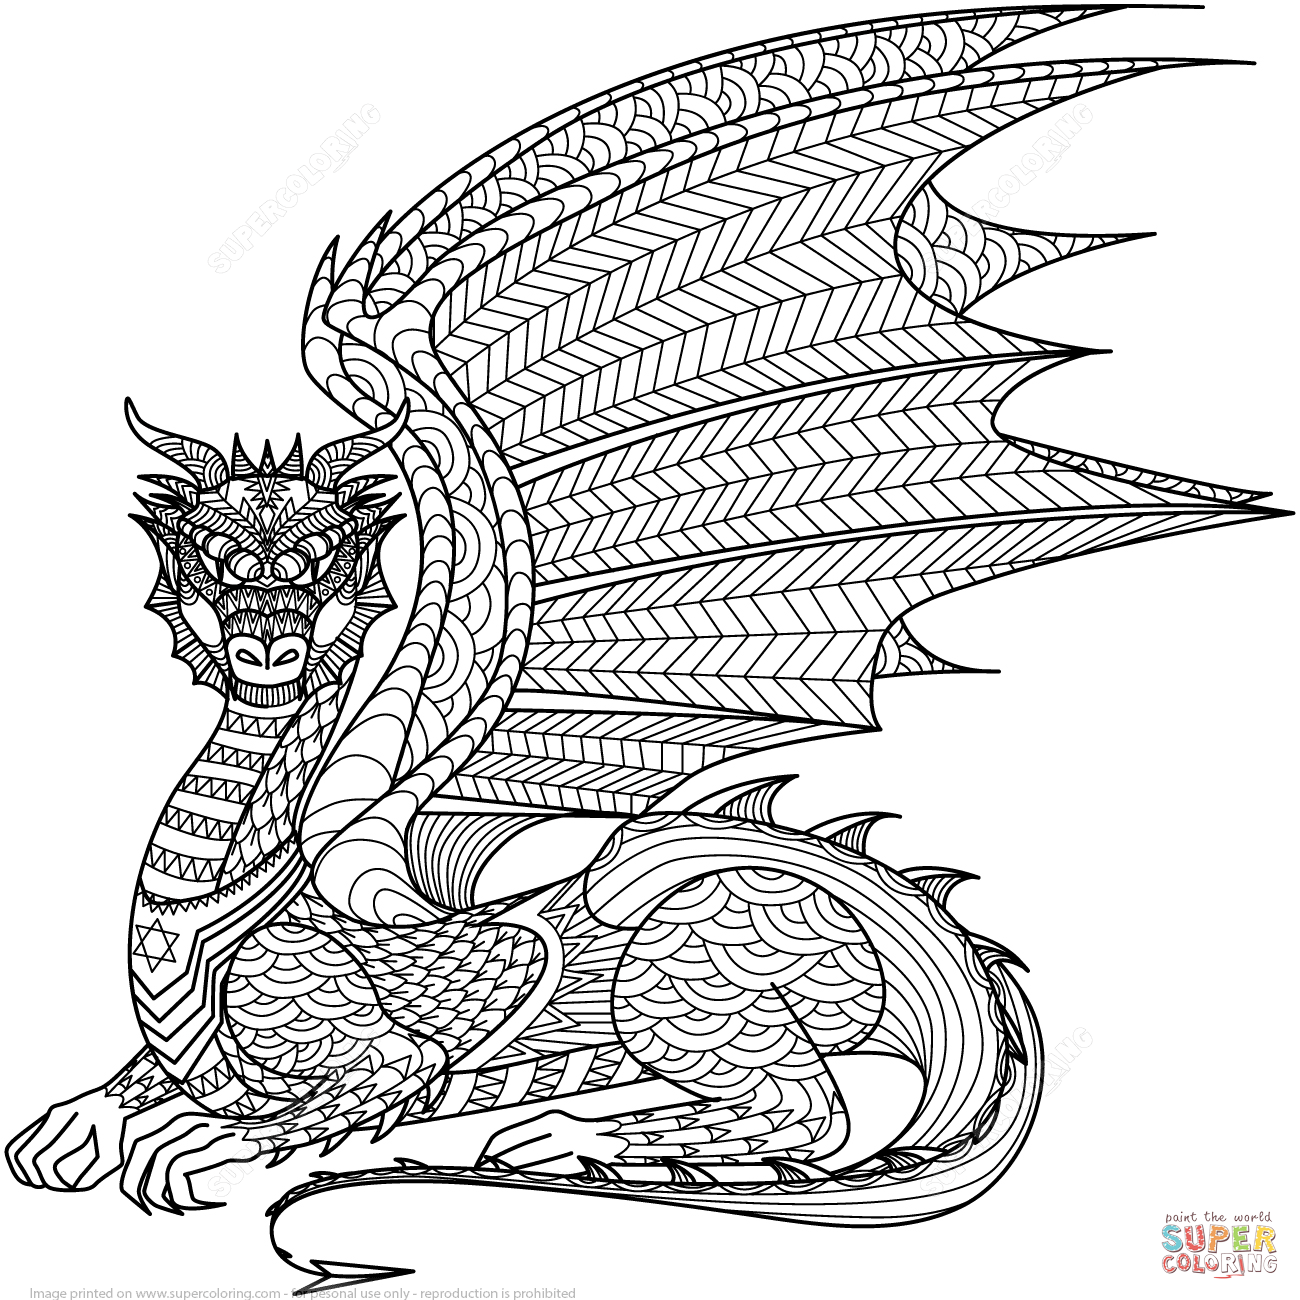 Dragon Zentangle Coloring Page | Free Printable Coloring ...